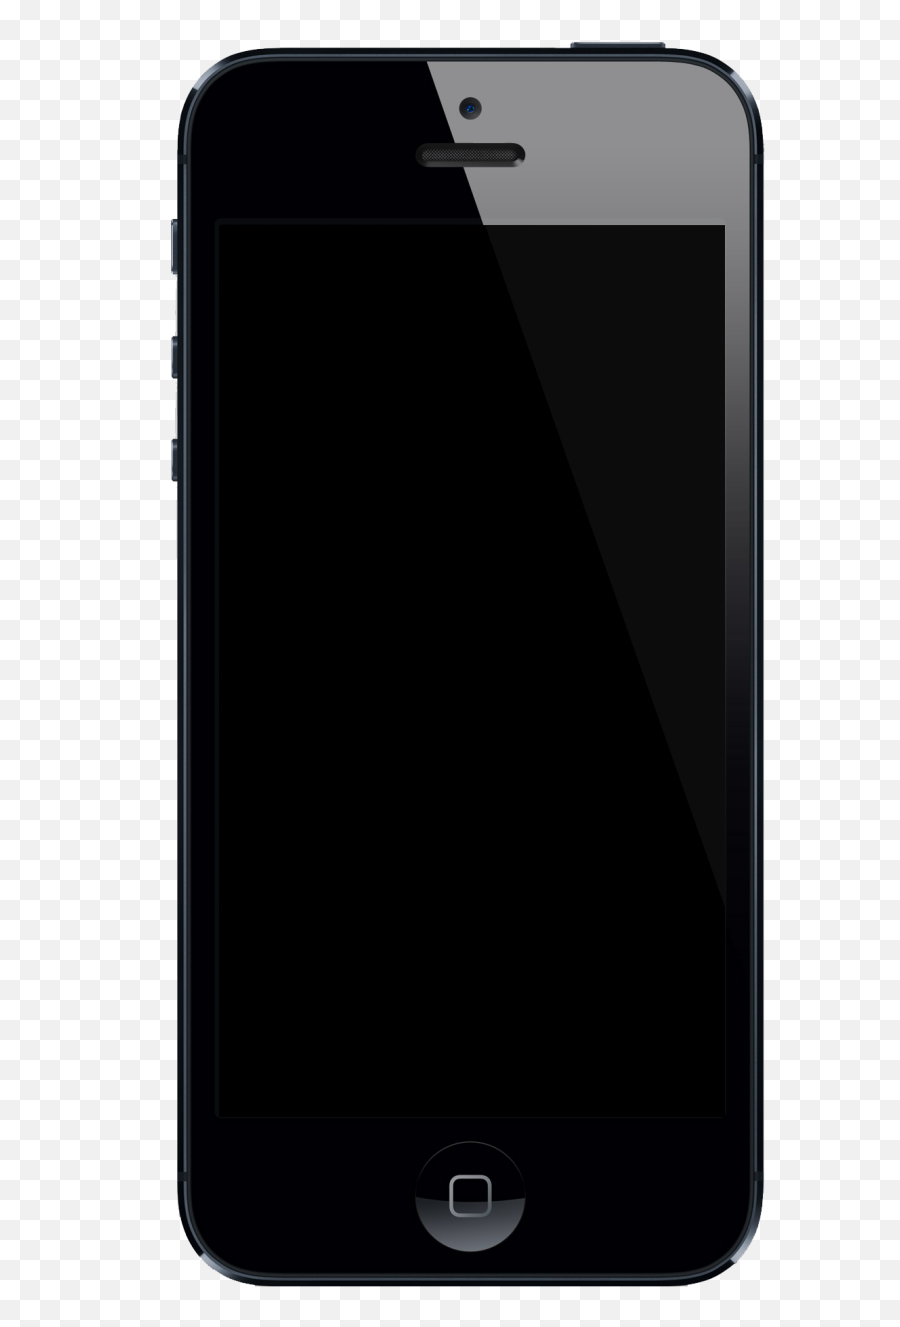 Iphone Ipad Ipod Android Computer - Iphone Black Screen No Background Emoji,Ipad Stuck On Apple Logo